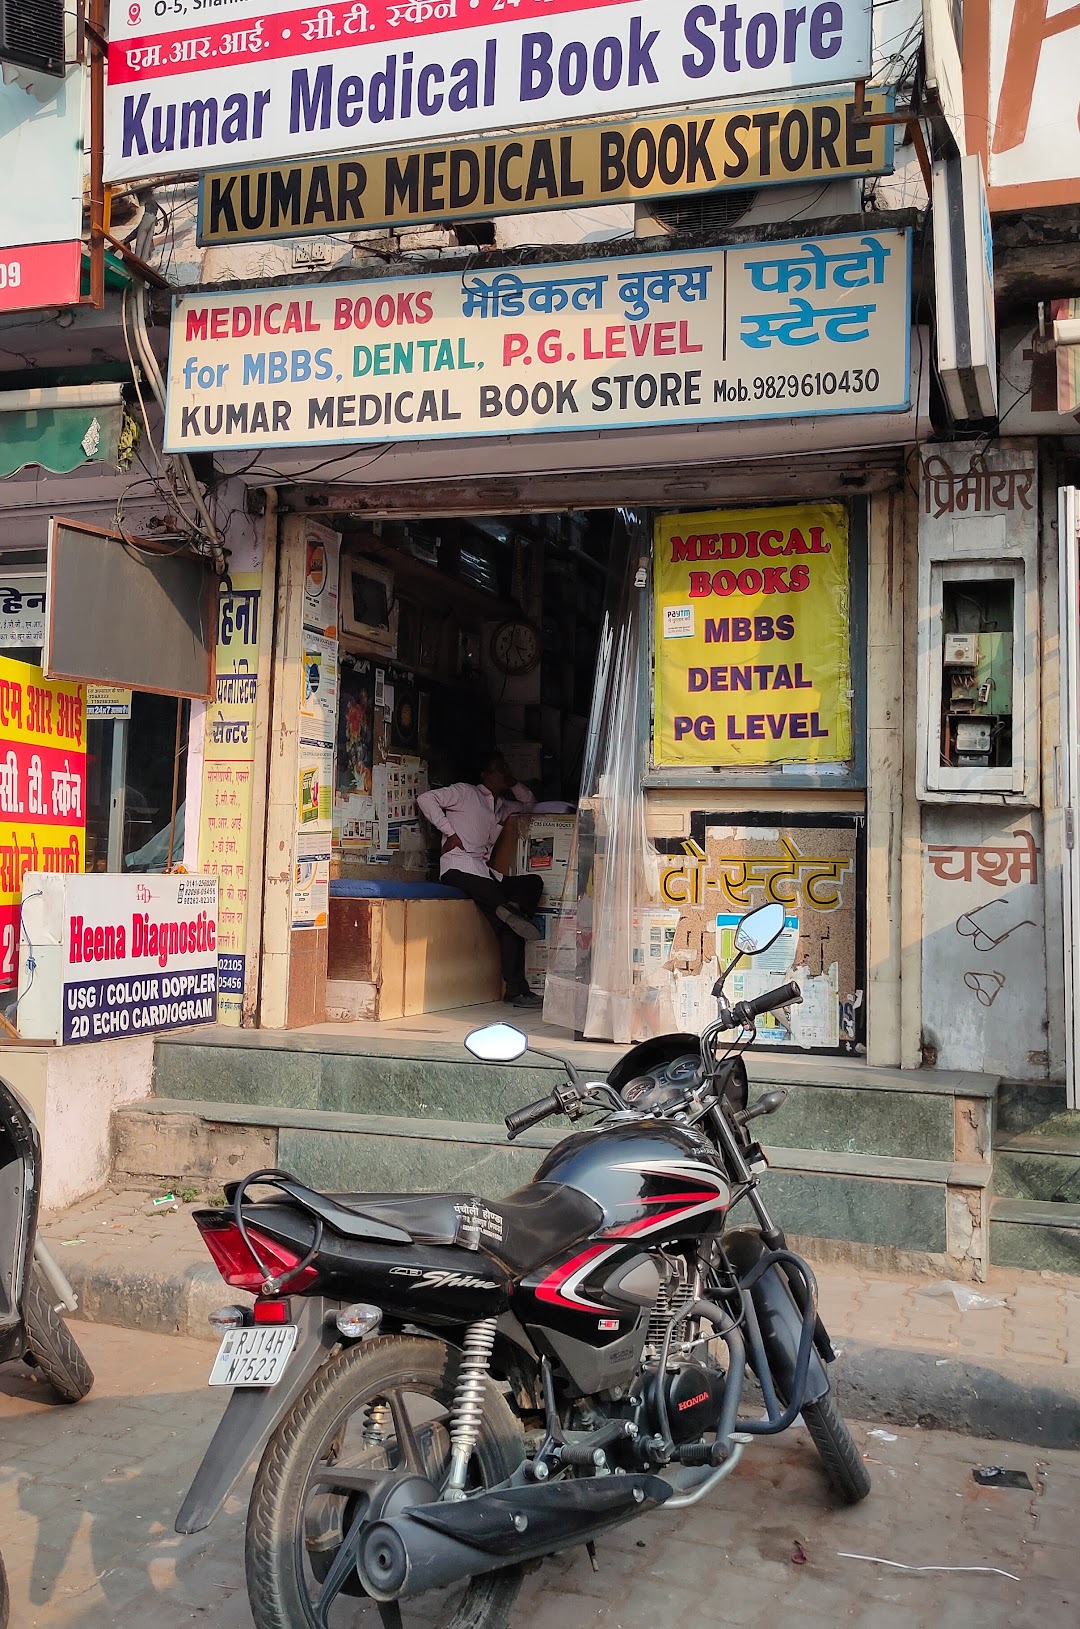 Kumar Medical Book Store